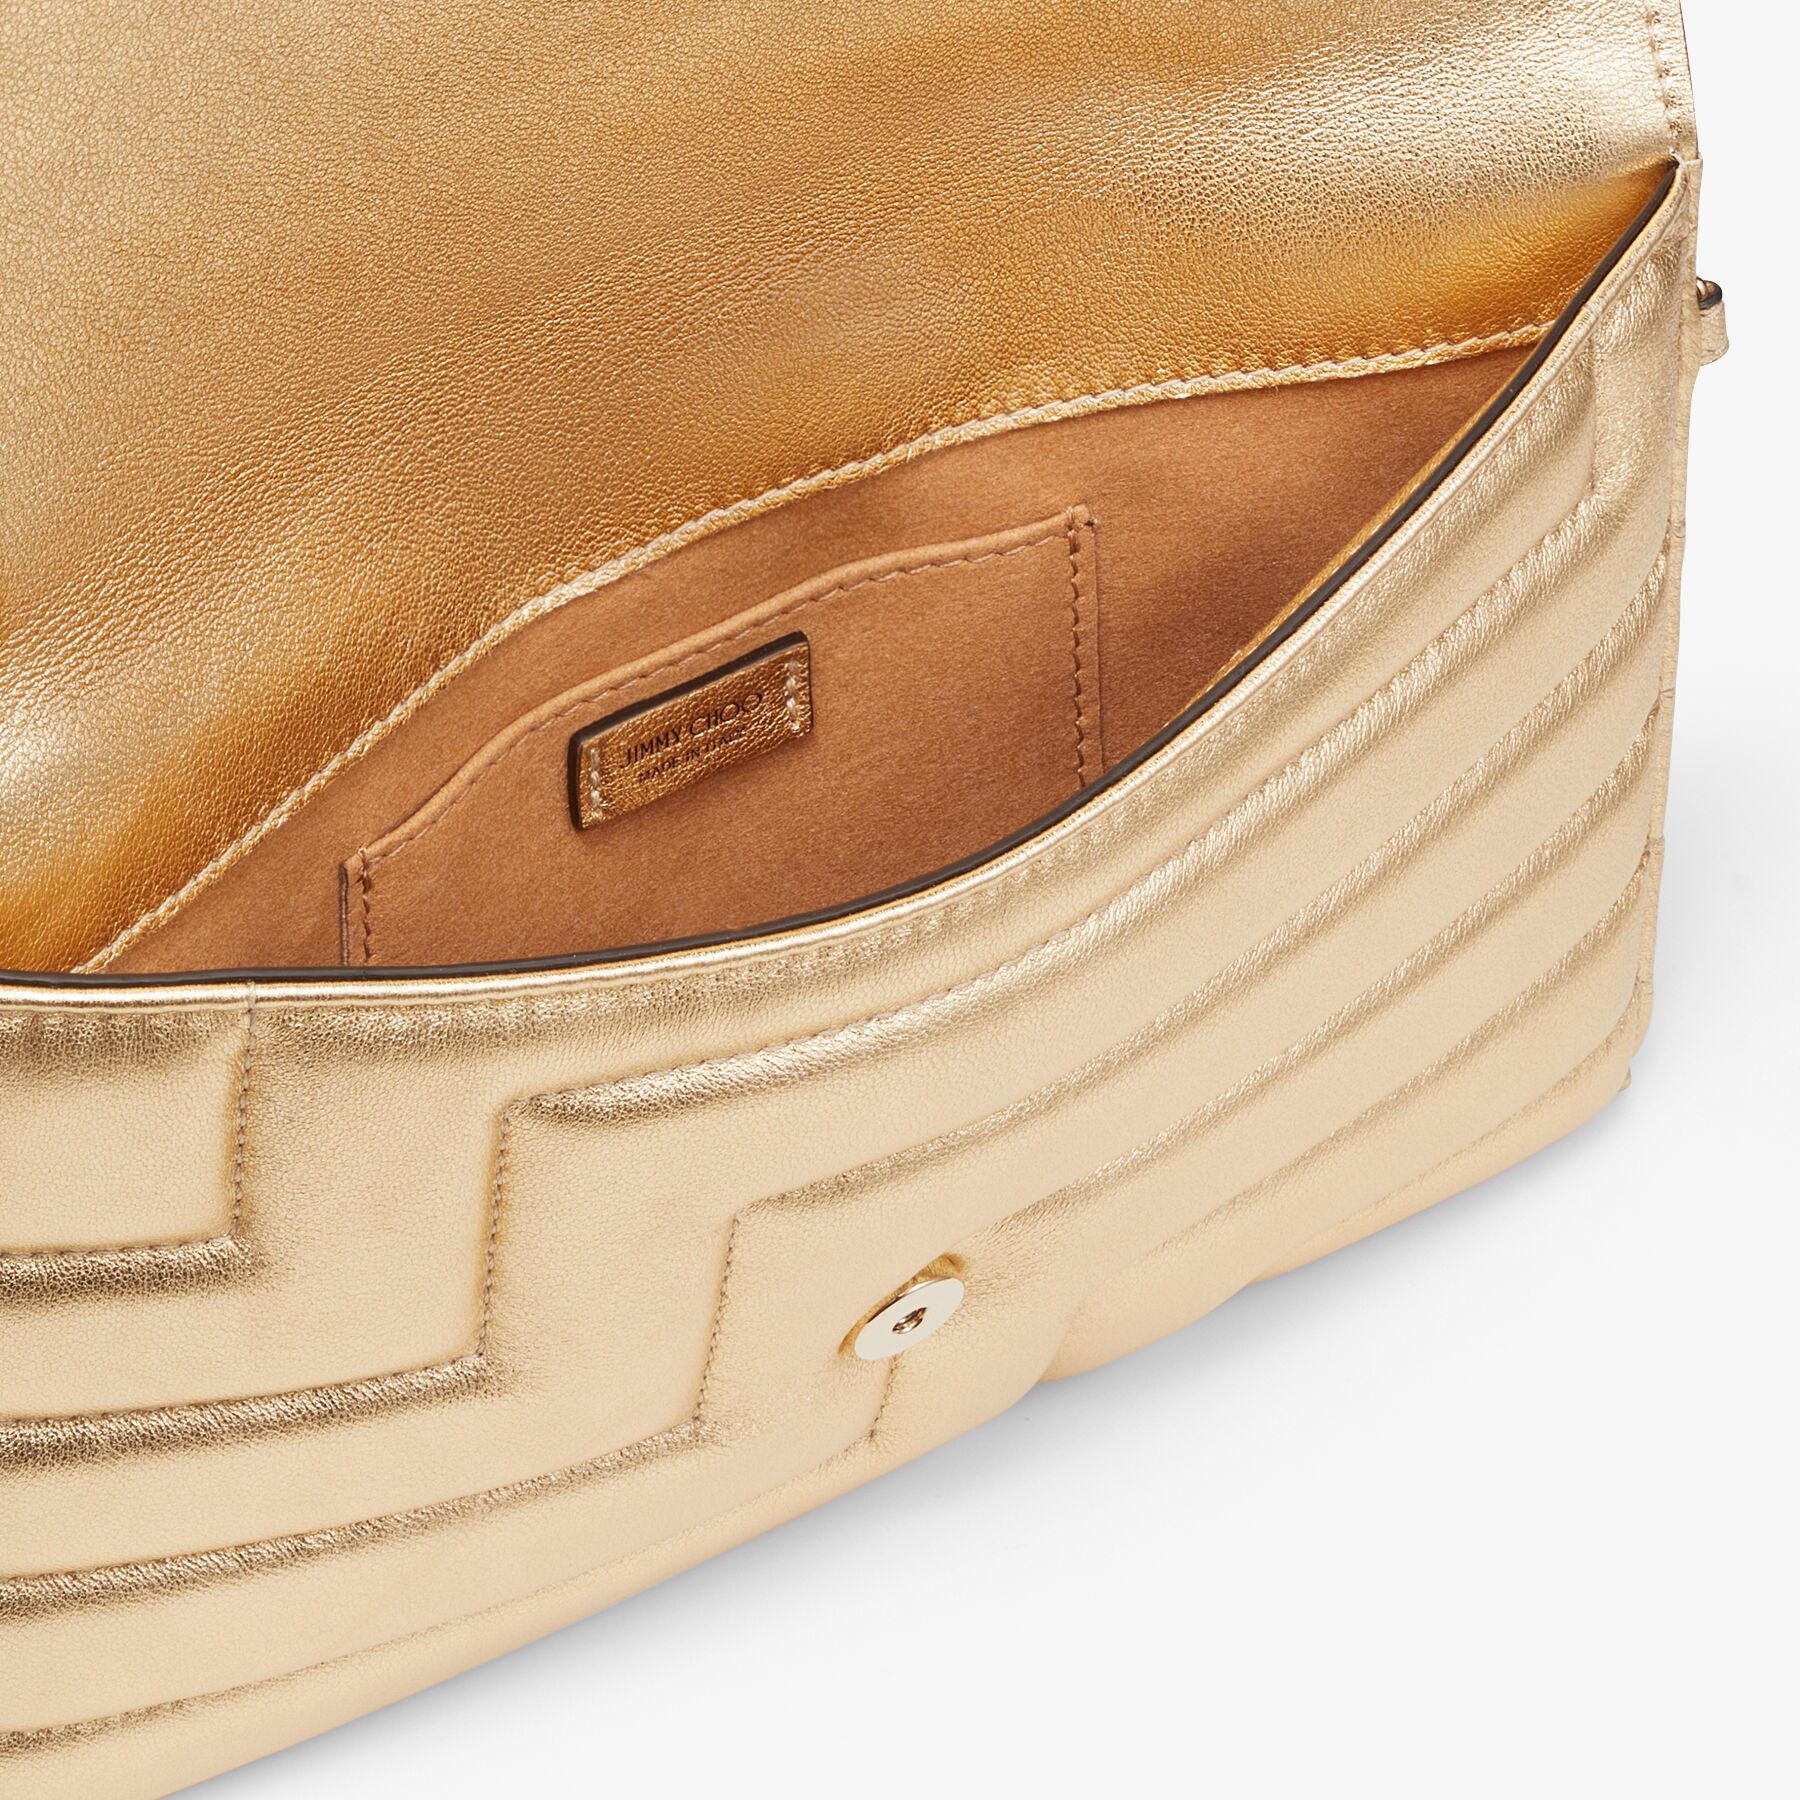 JC SQUARE ENVELOPE | Gold Avenue Metallic Nappa Leather Pouch